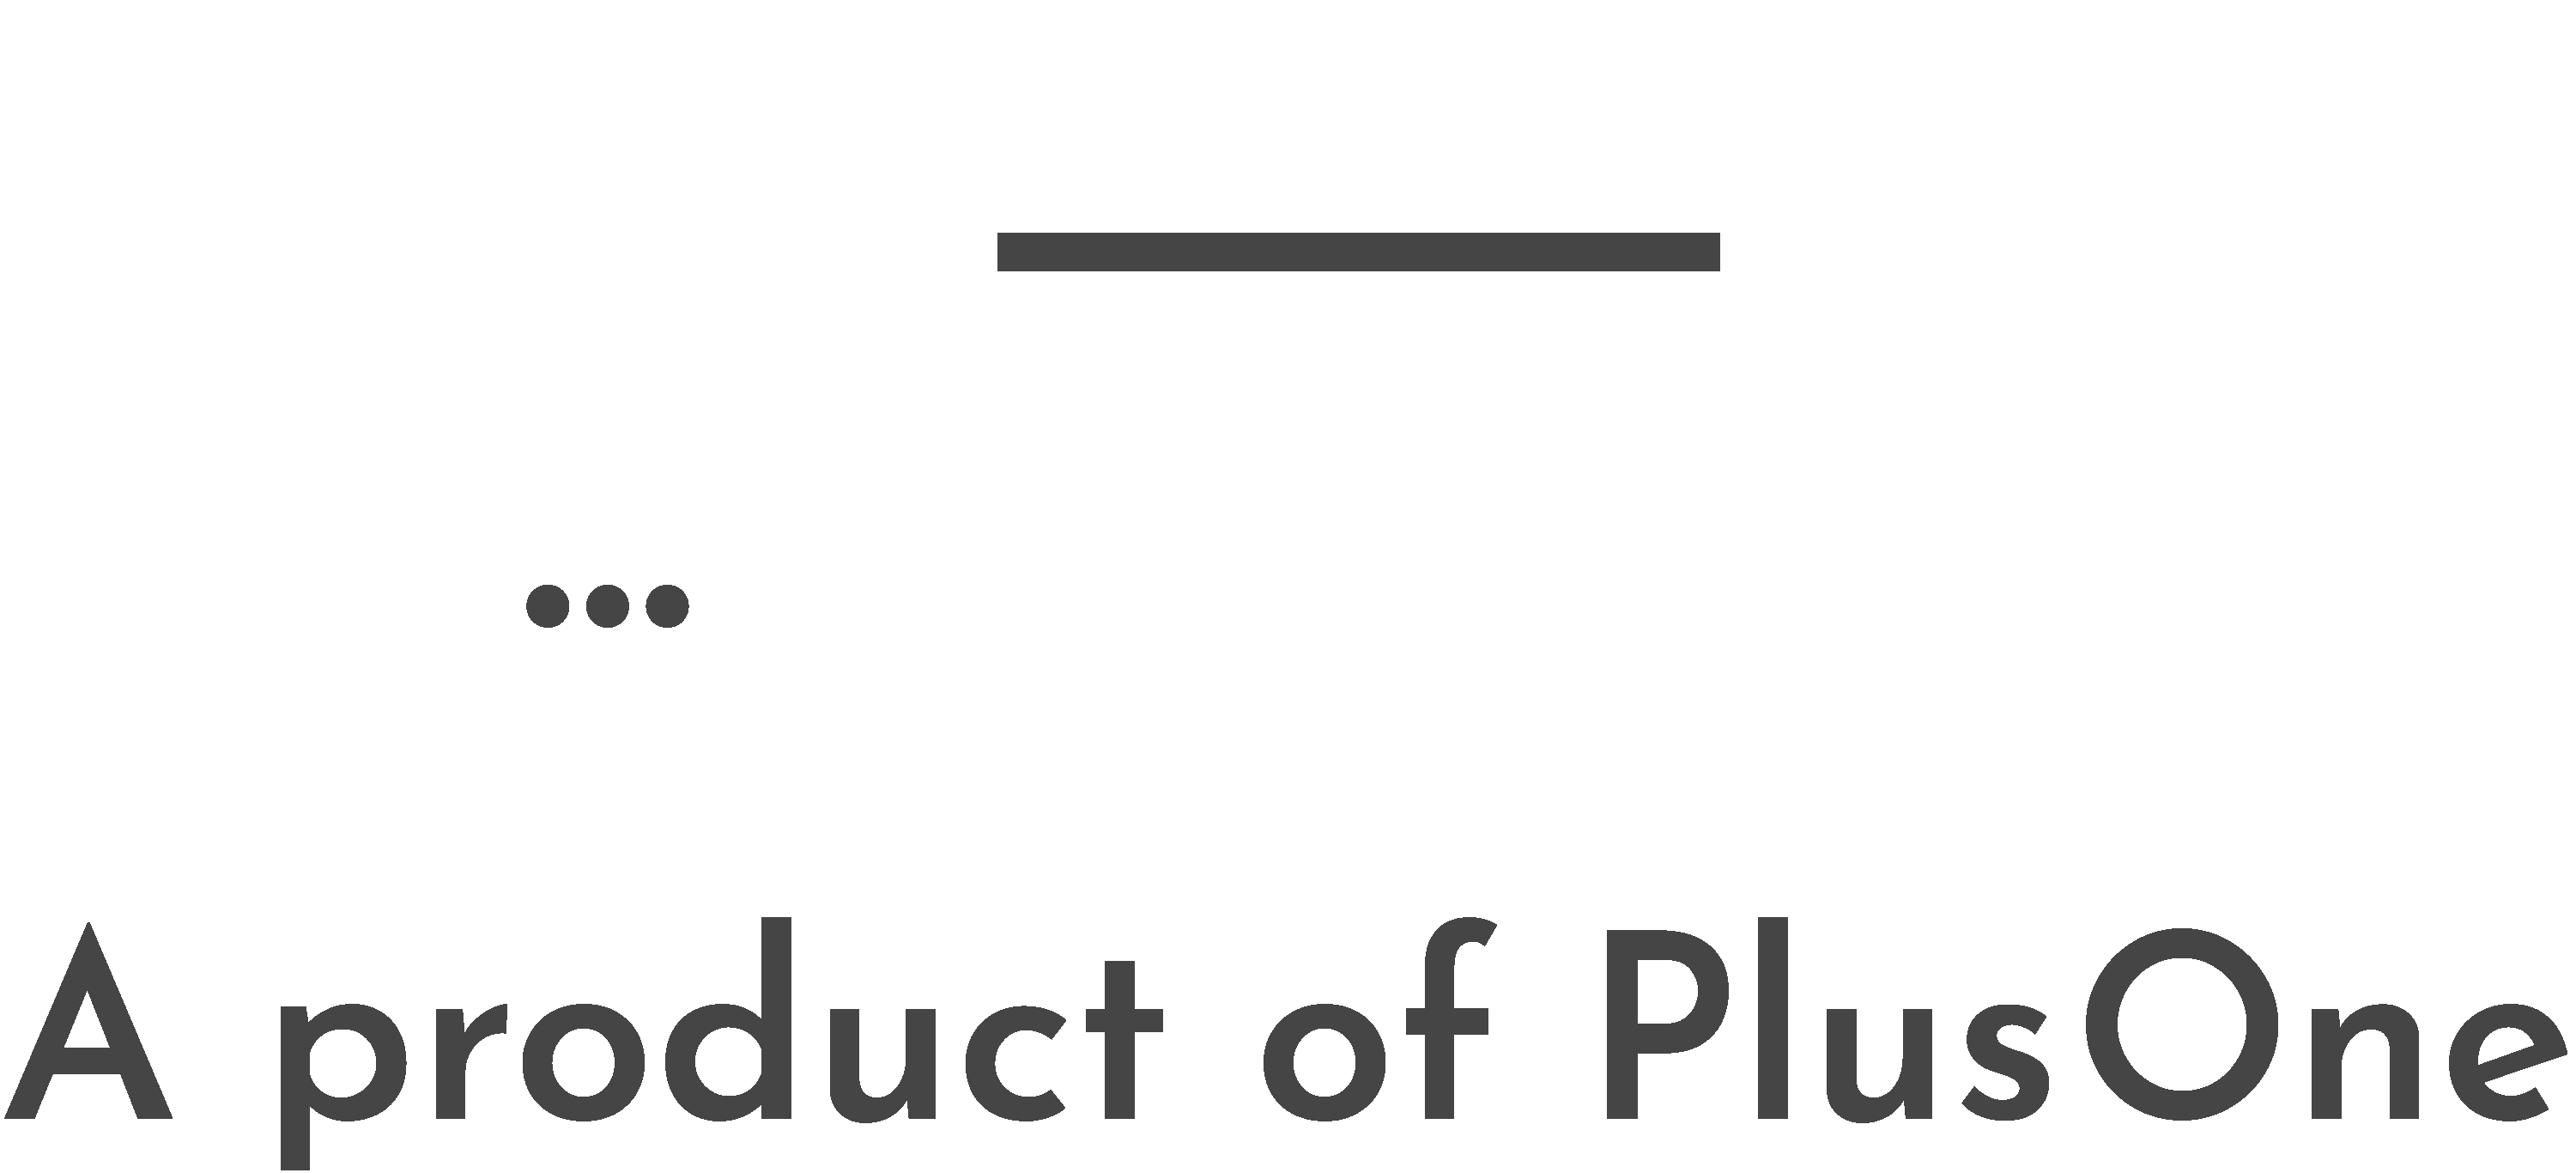 Manuals of Practice